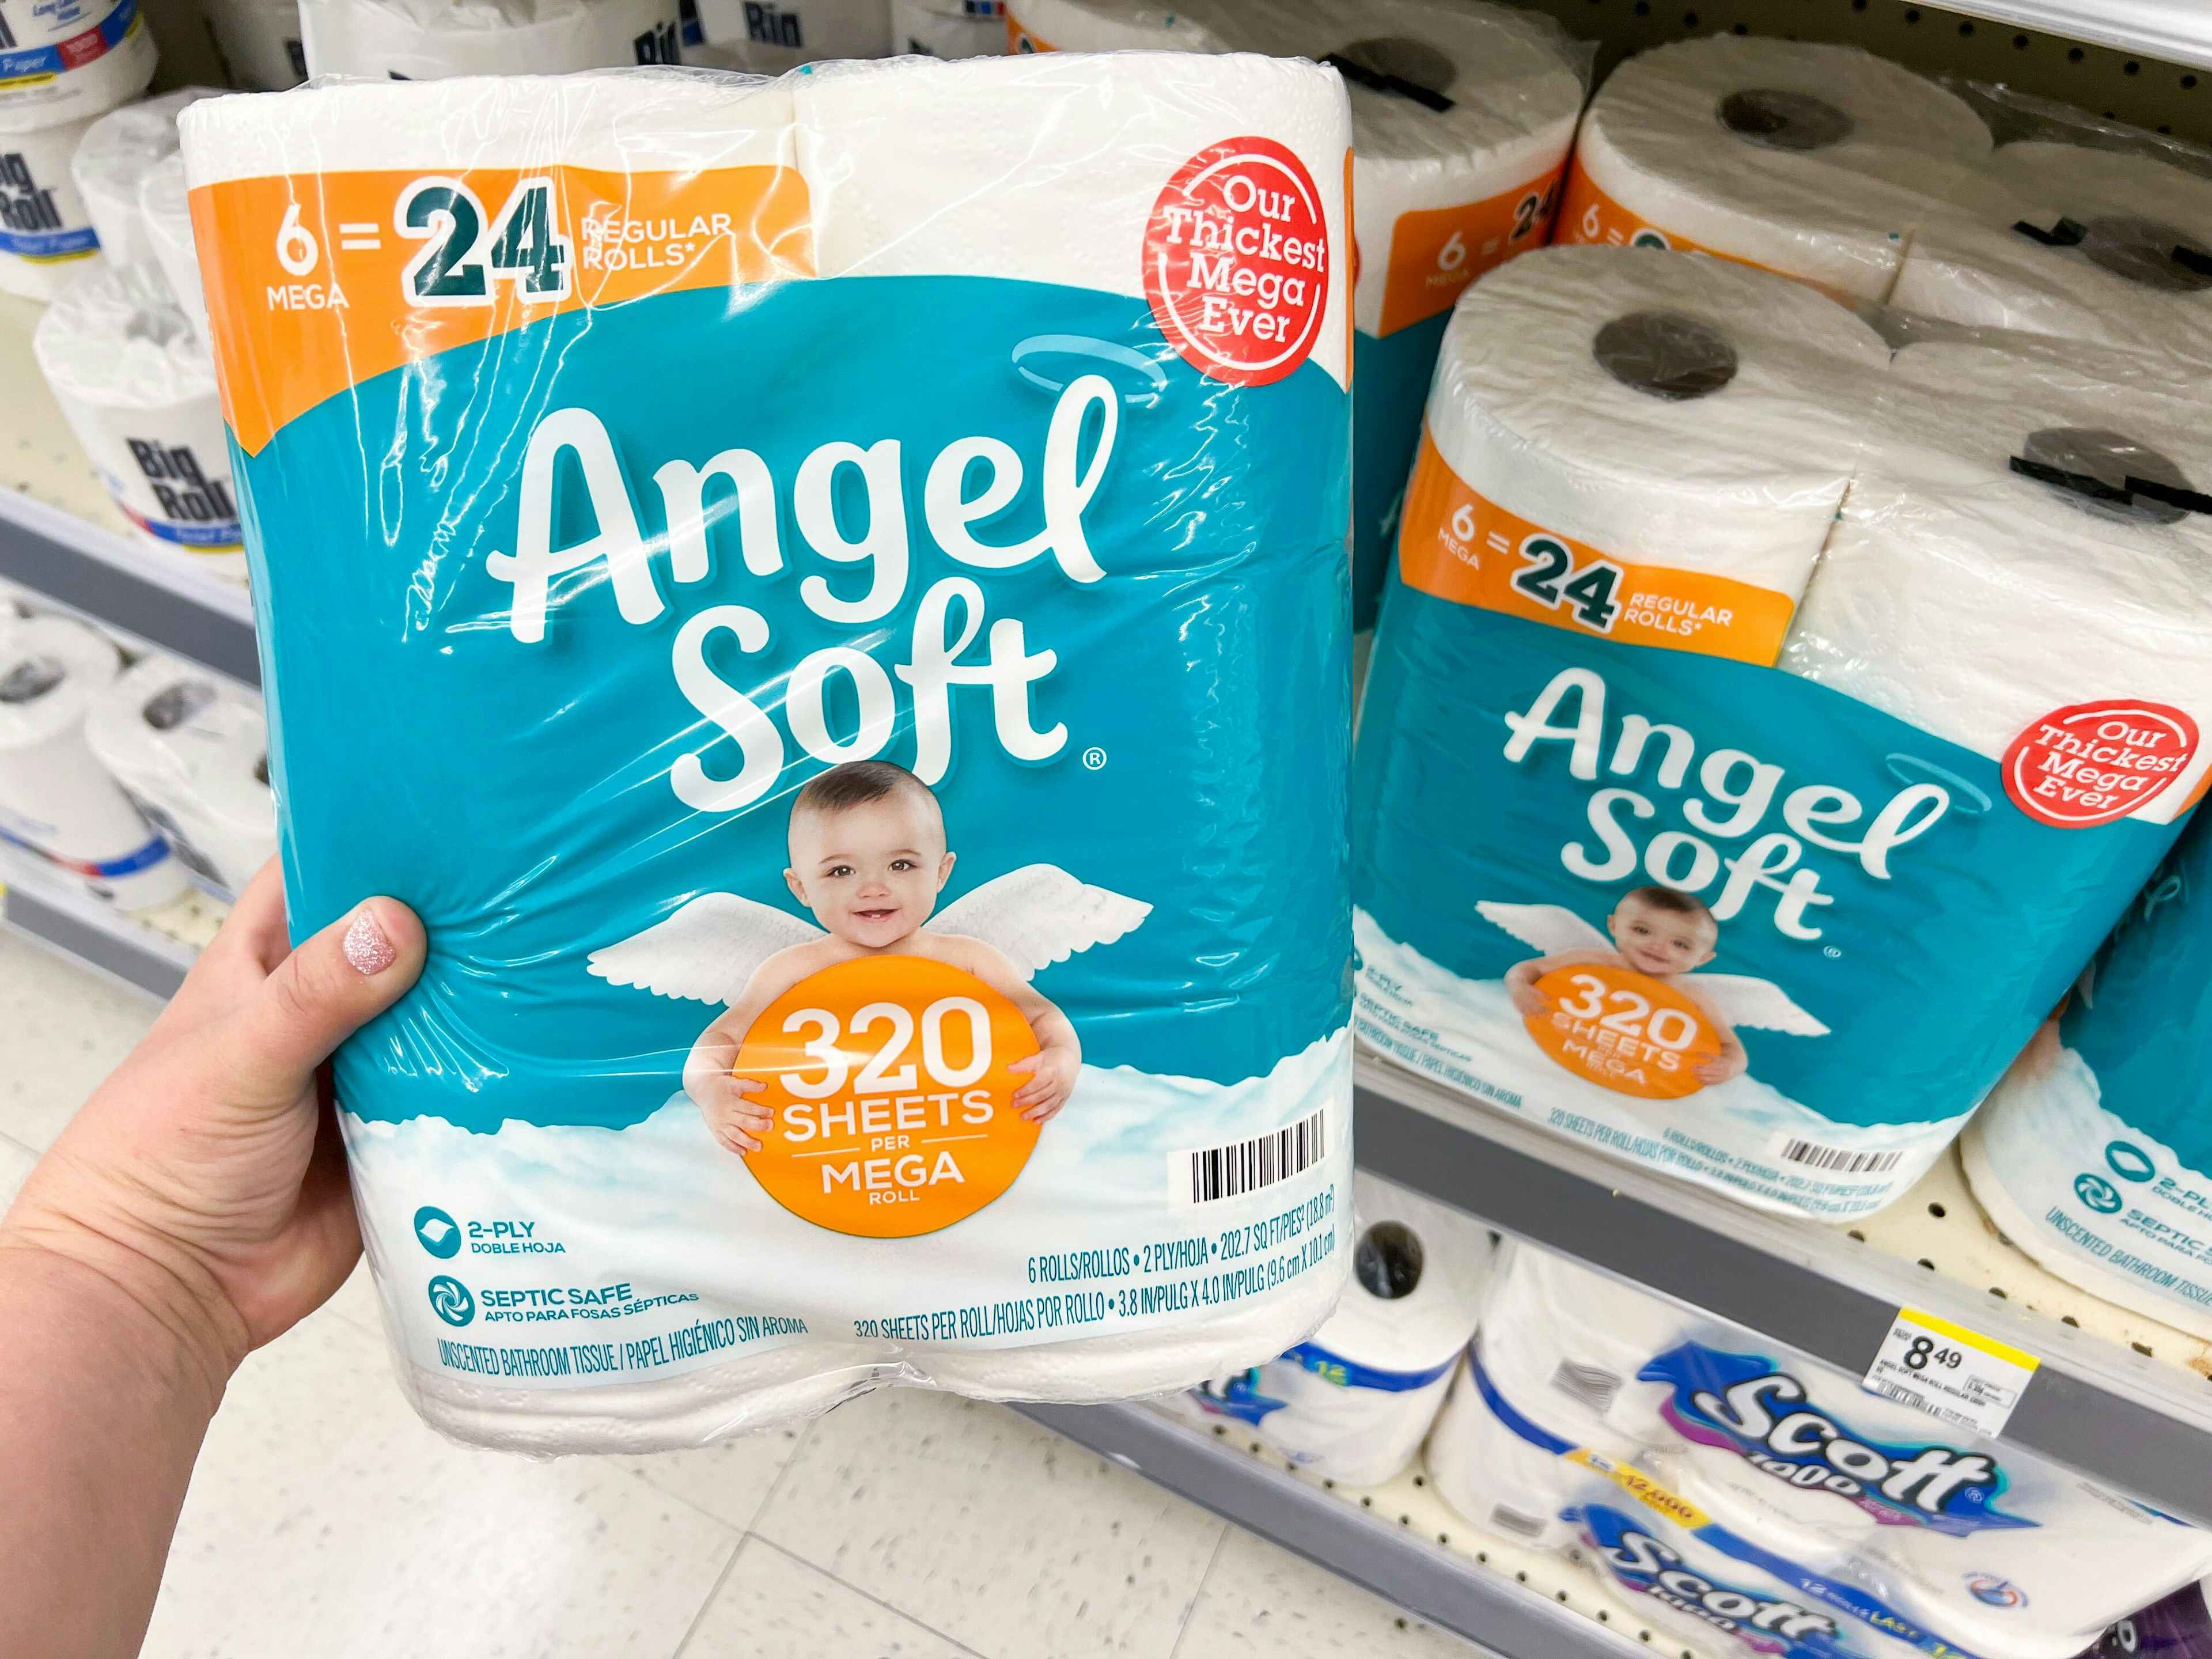 angel-soft-tissue-walgreens